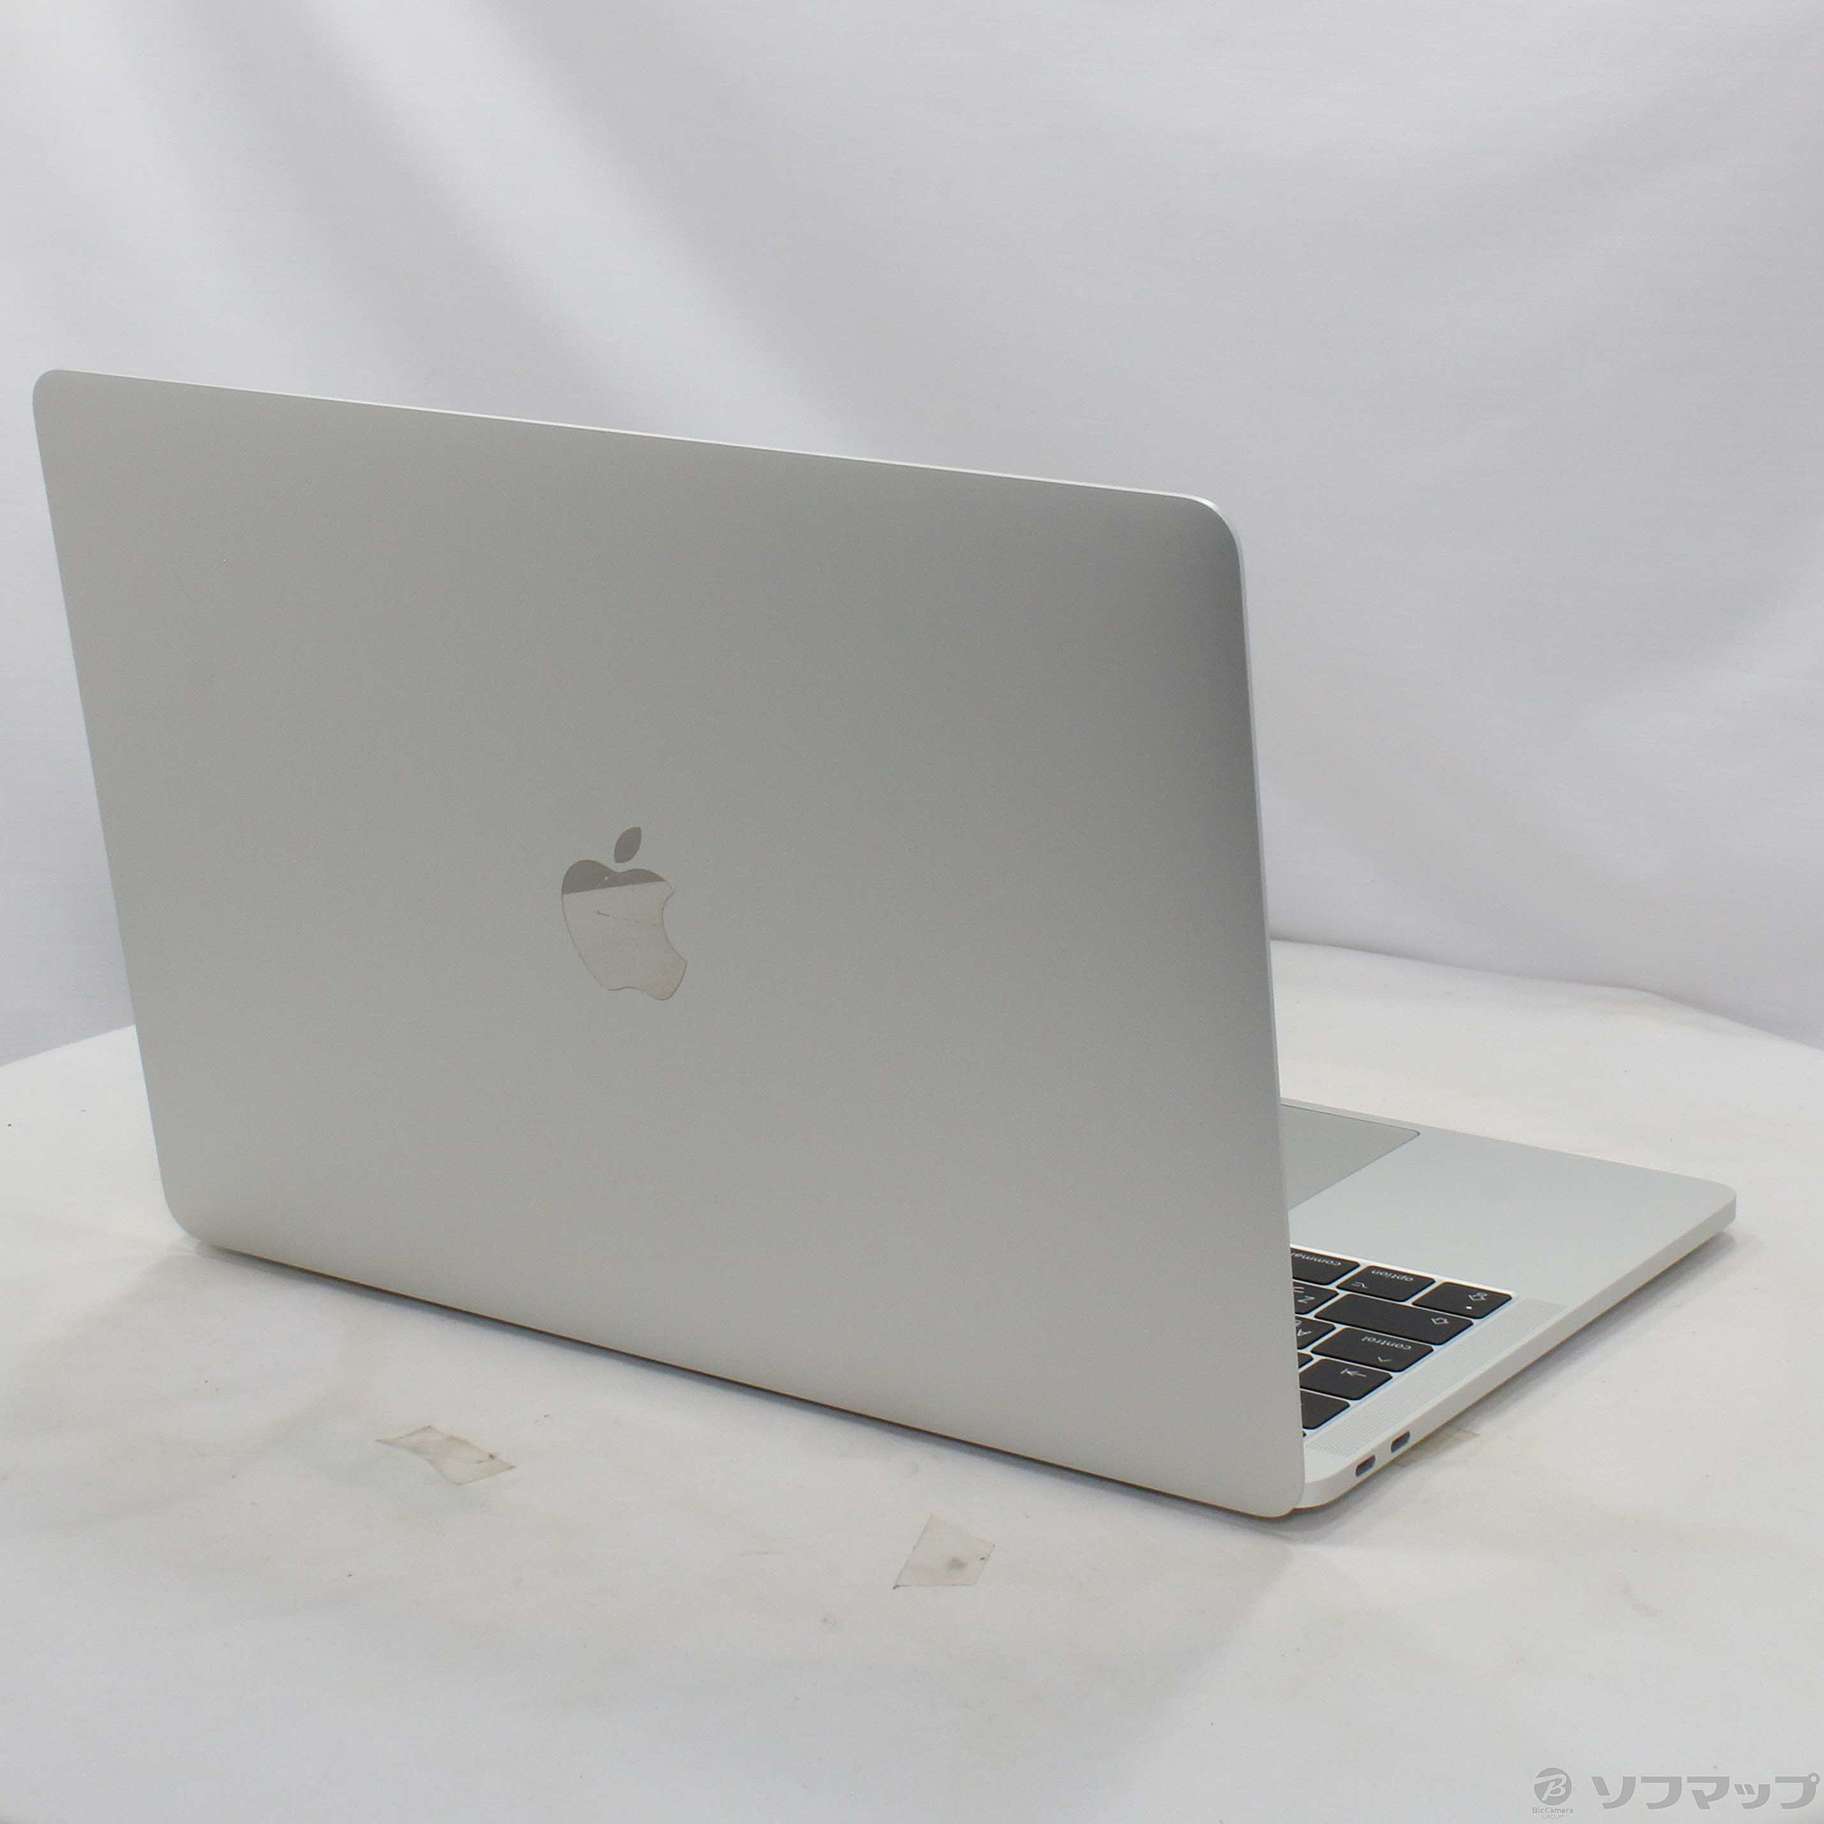 MacBook Pro MACBOOK PRO MLUQ2J/A